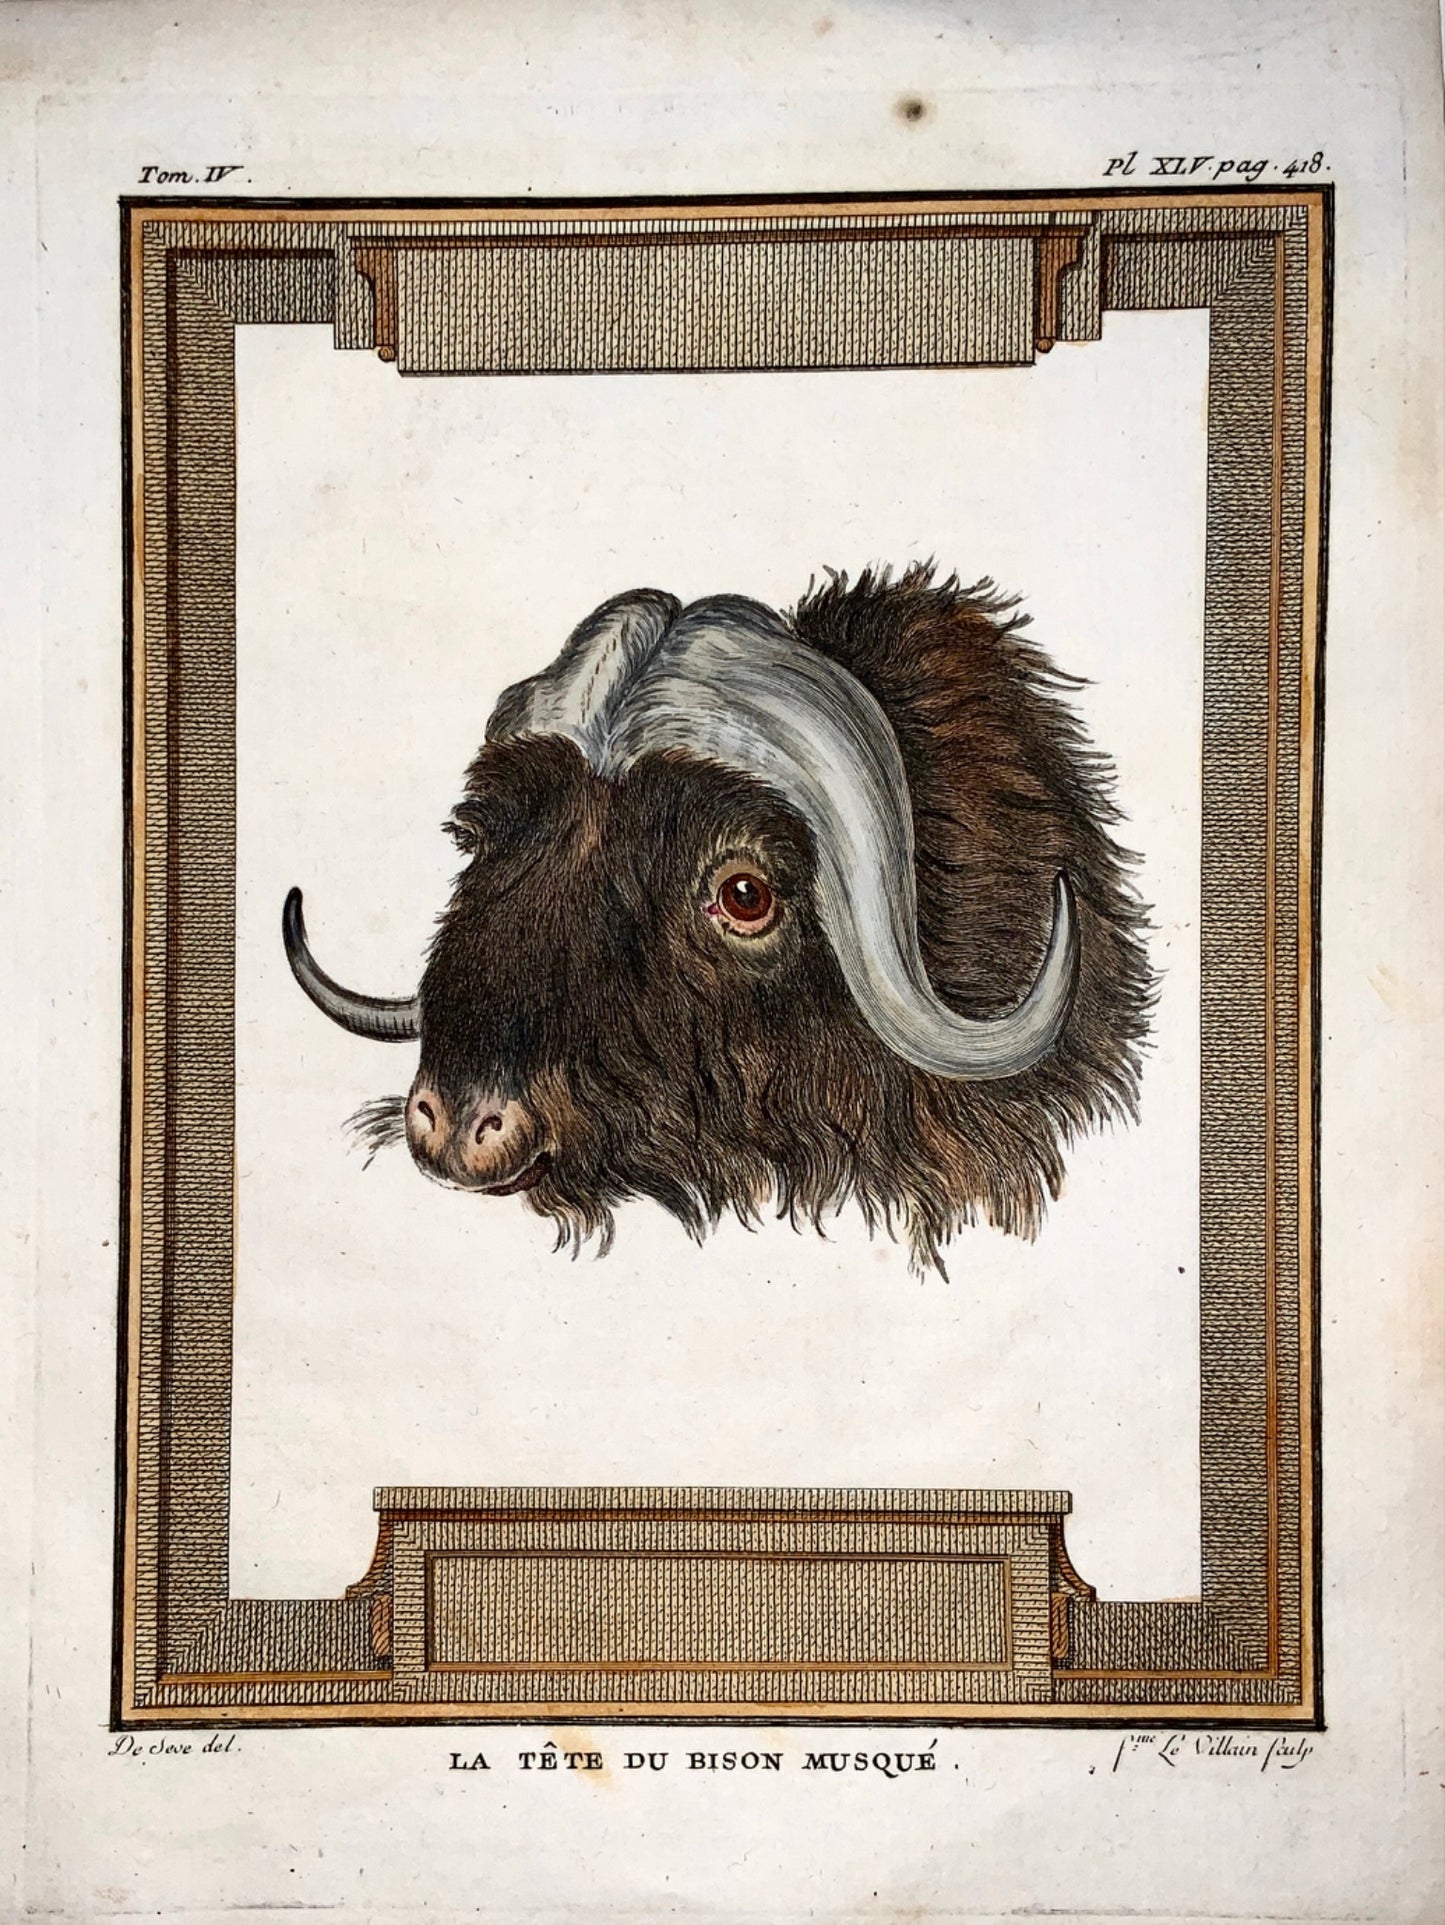 1779 Villain; J. de Seve - BISON HEAD - Mammal - 4to engraving